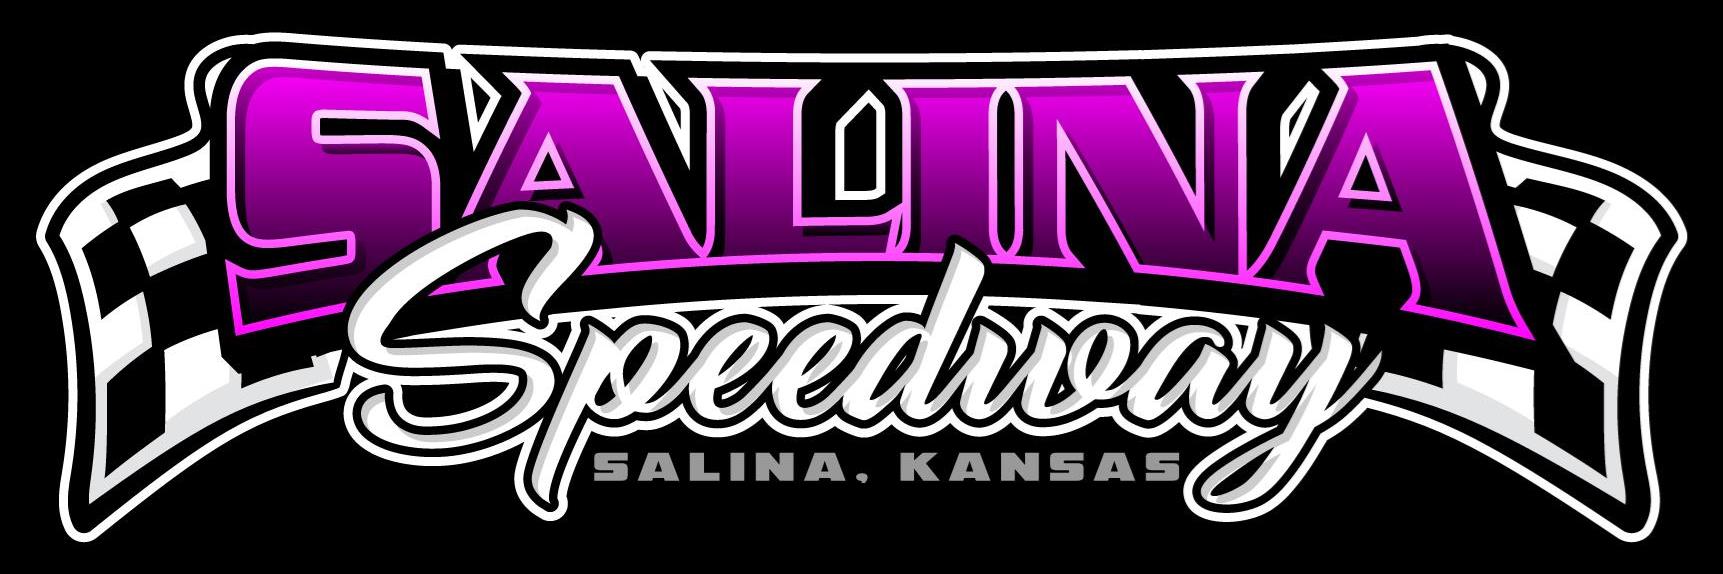 Salina Speedway